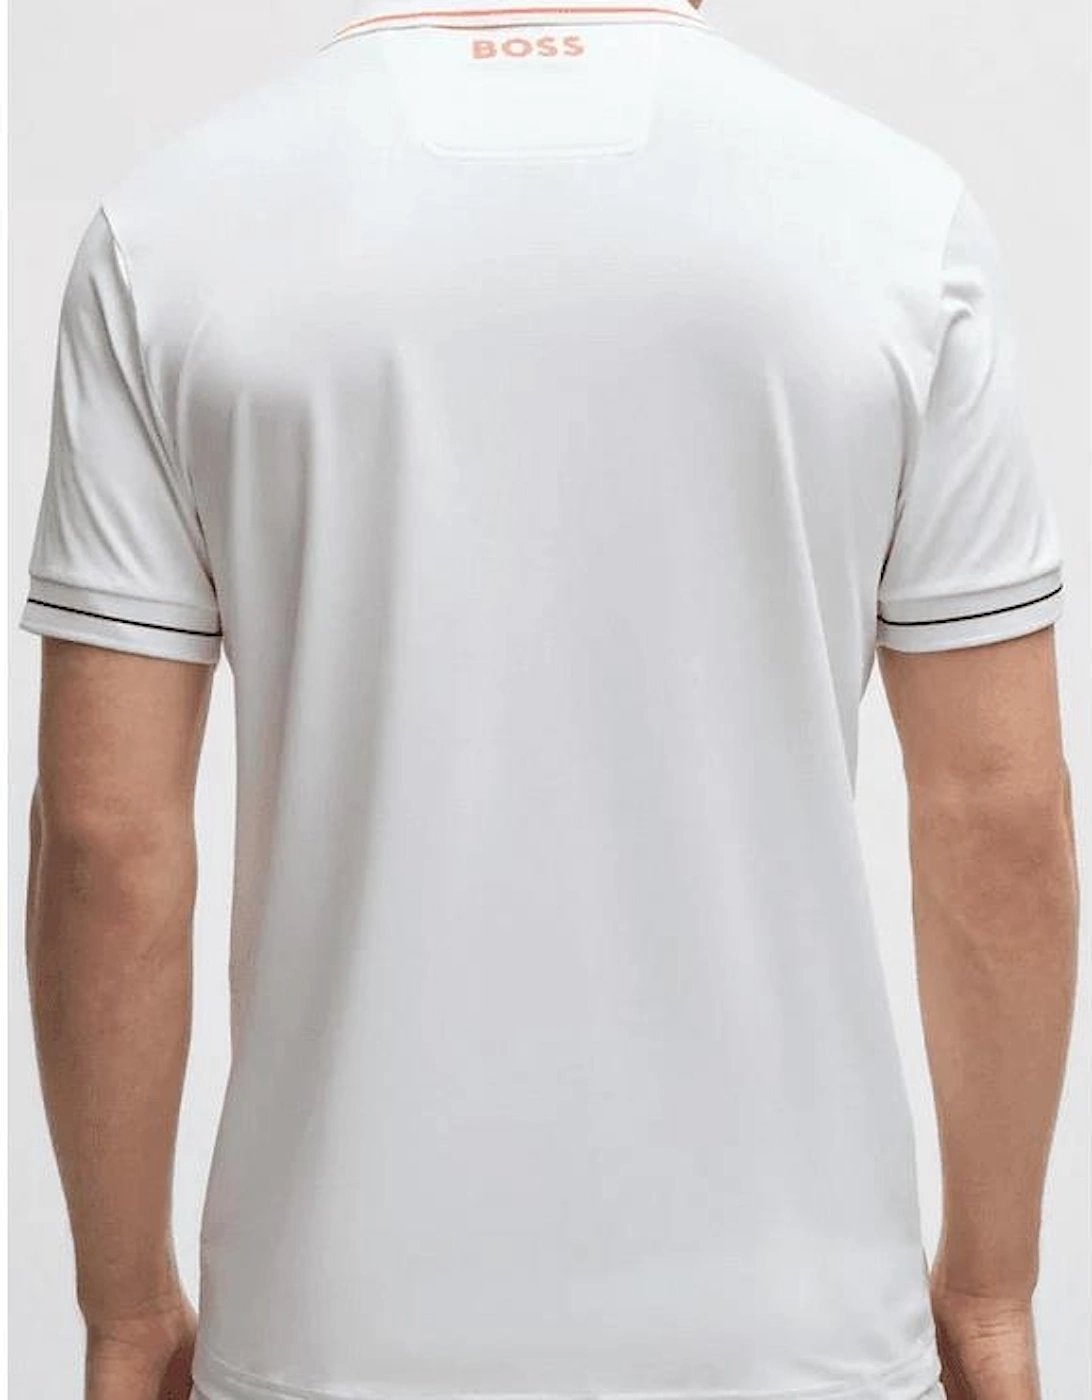 Paul Print Logo Slim Fit White/Orange Polo Shirt